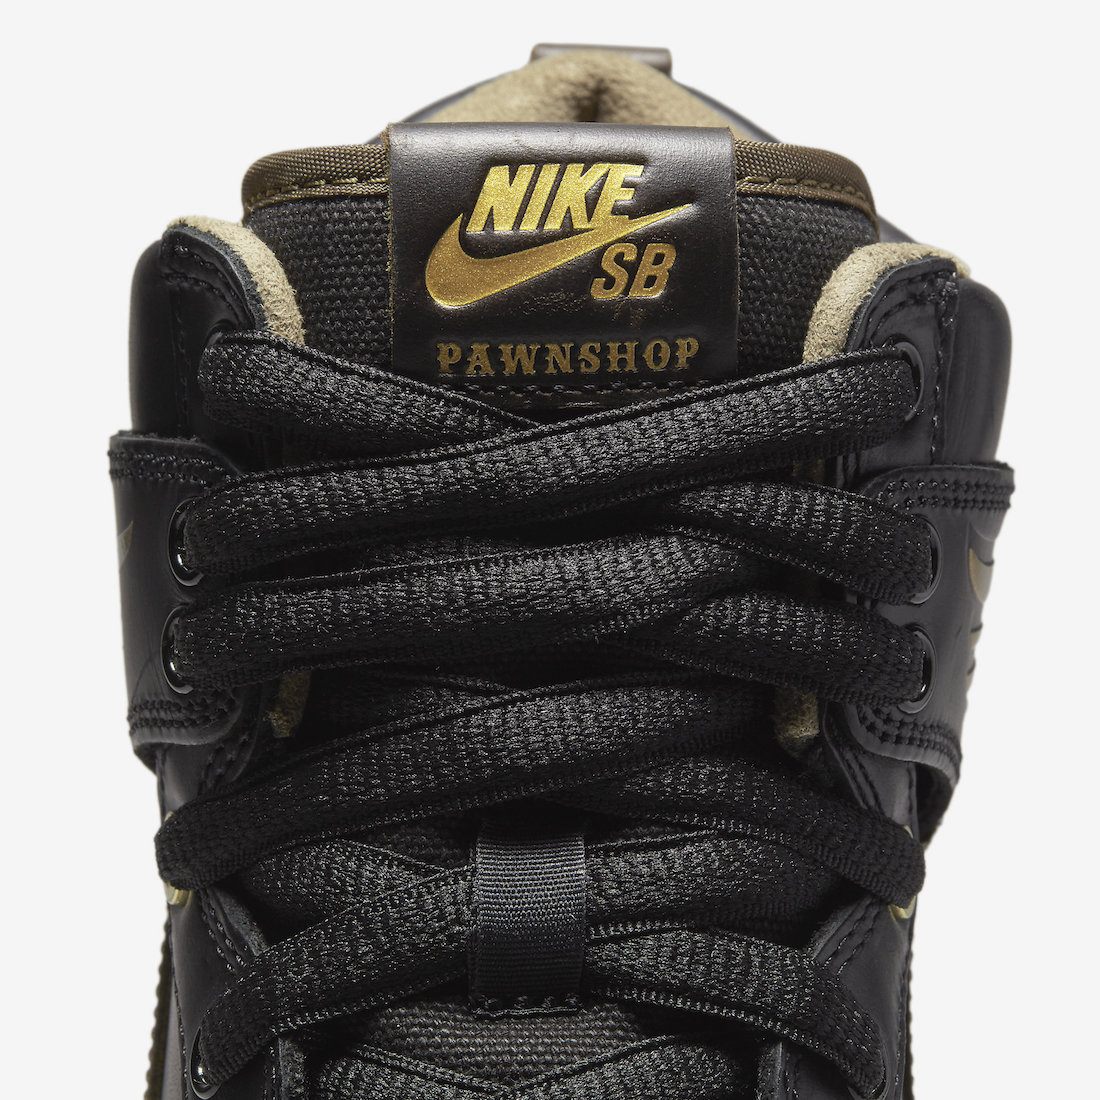 Pawnshop Nike SB Dunk High FJ0445-001 Release Date Tongue